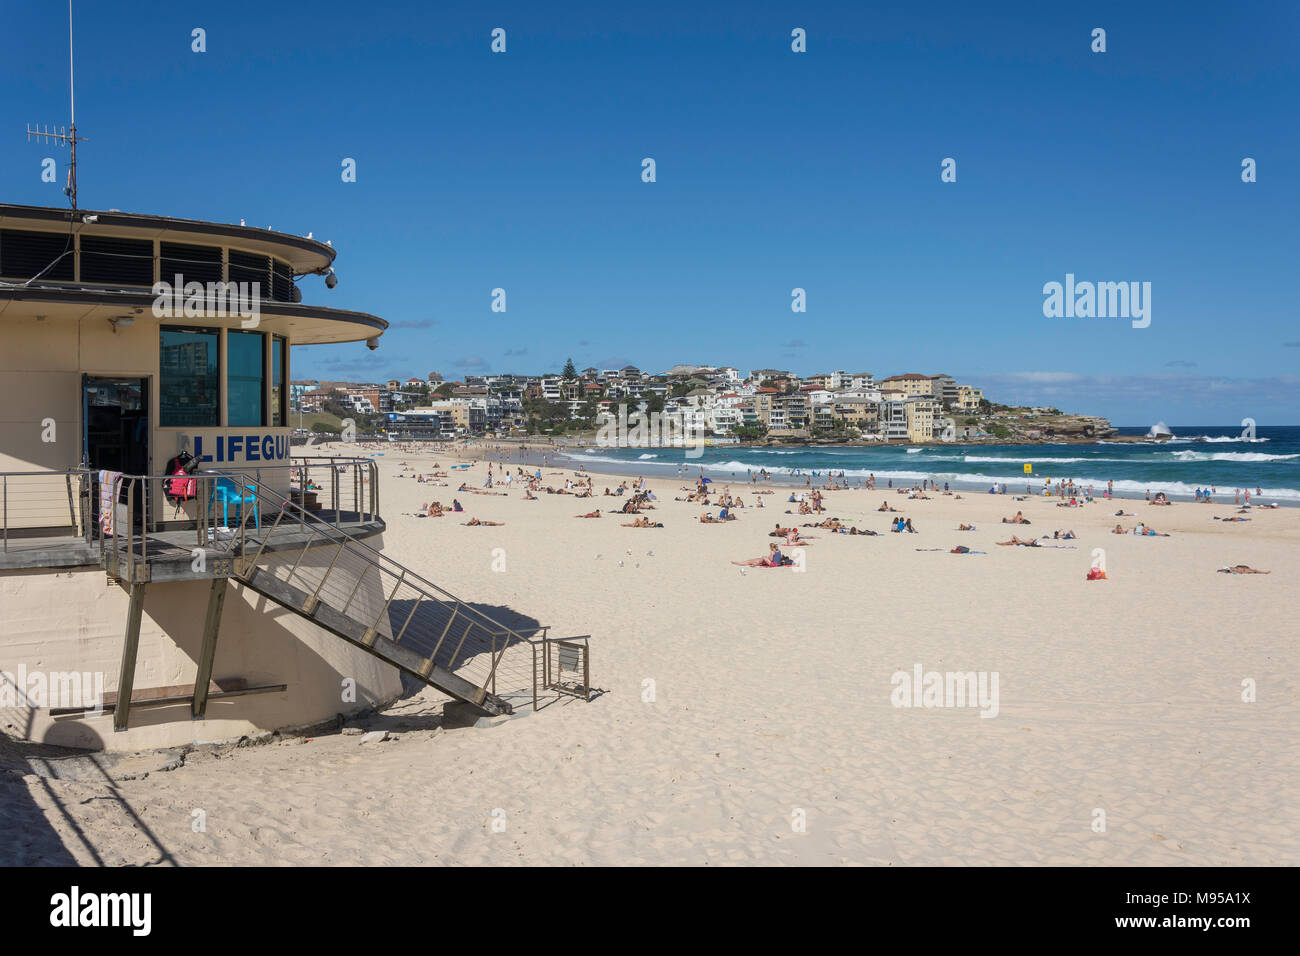 Lifeguard station on Bondi Beach, Sydney, New South Wales, Australia Stock Photo